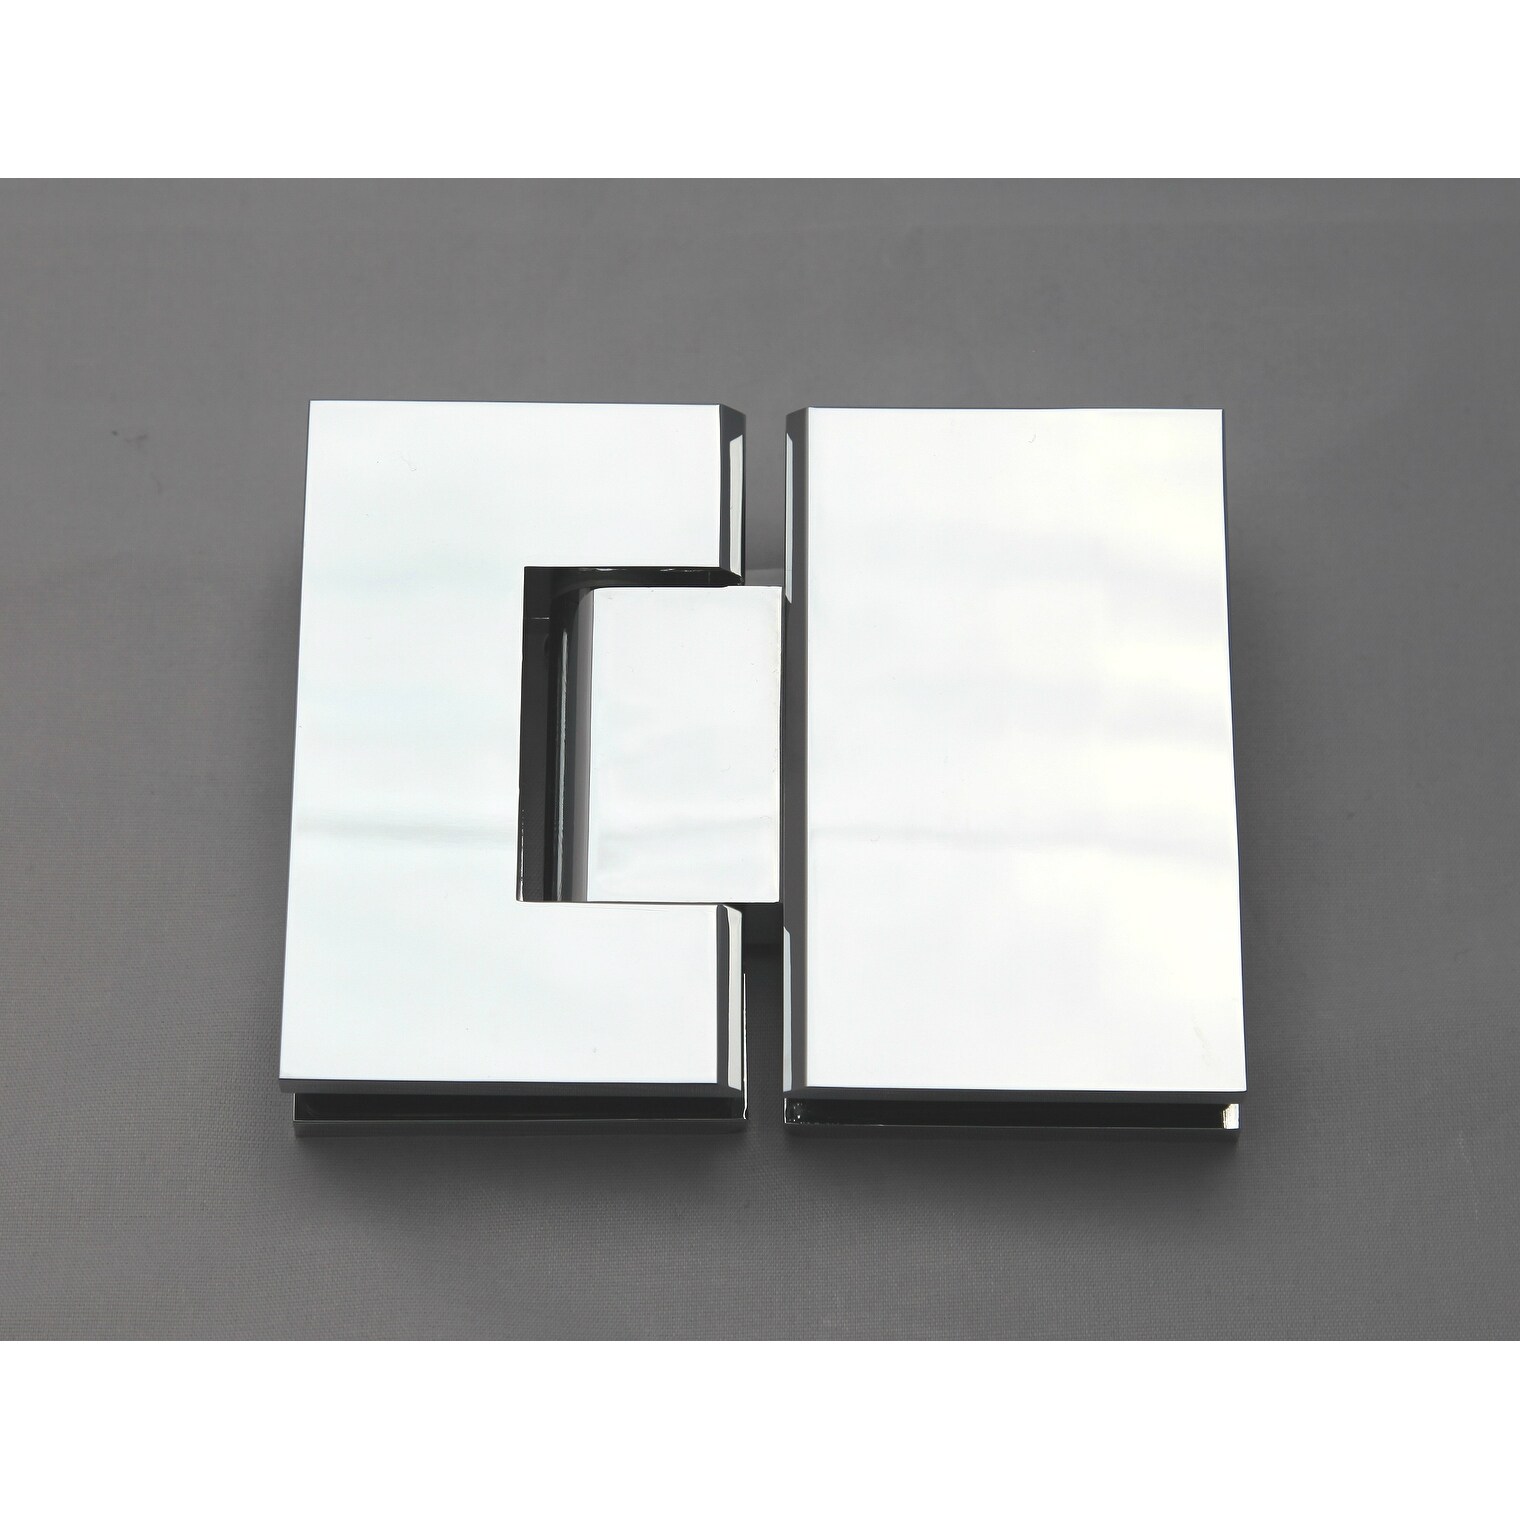 Glass Warehouse 78" x 58.25" Frameless Towel Bar Shower Door - Glass Hinge